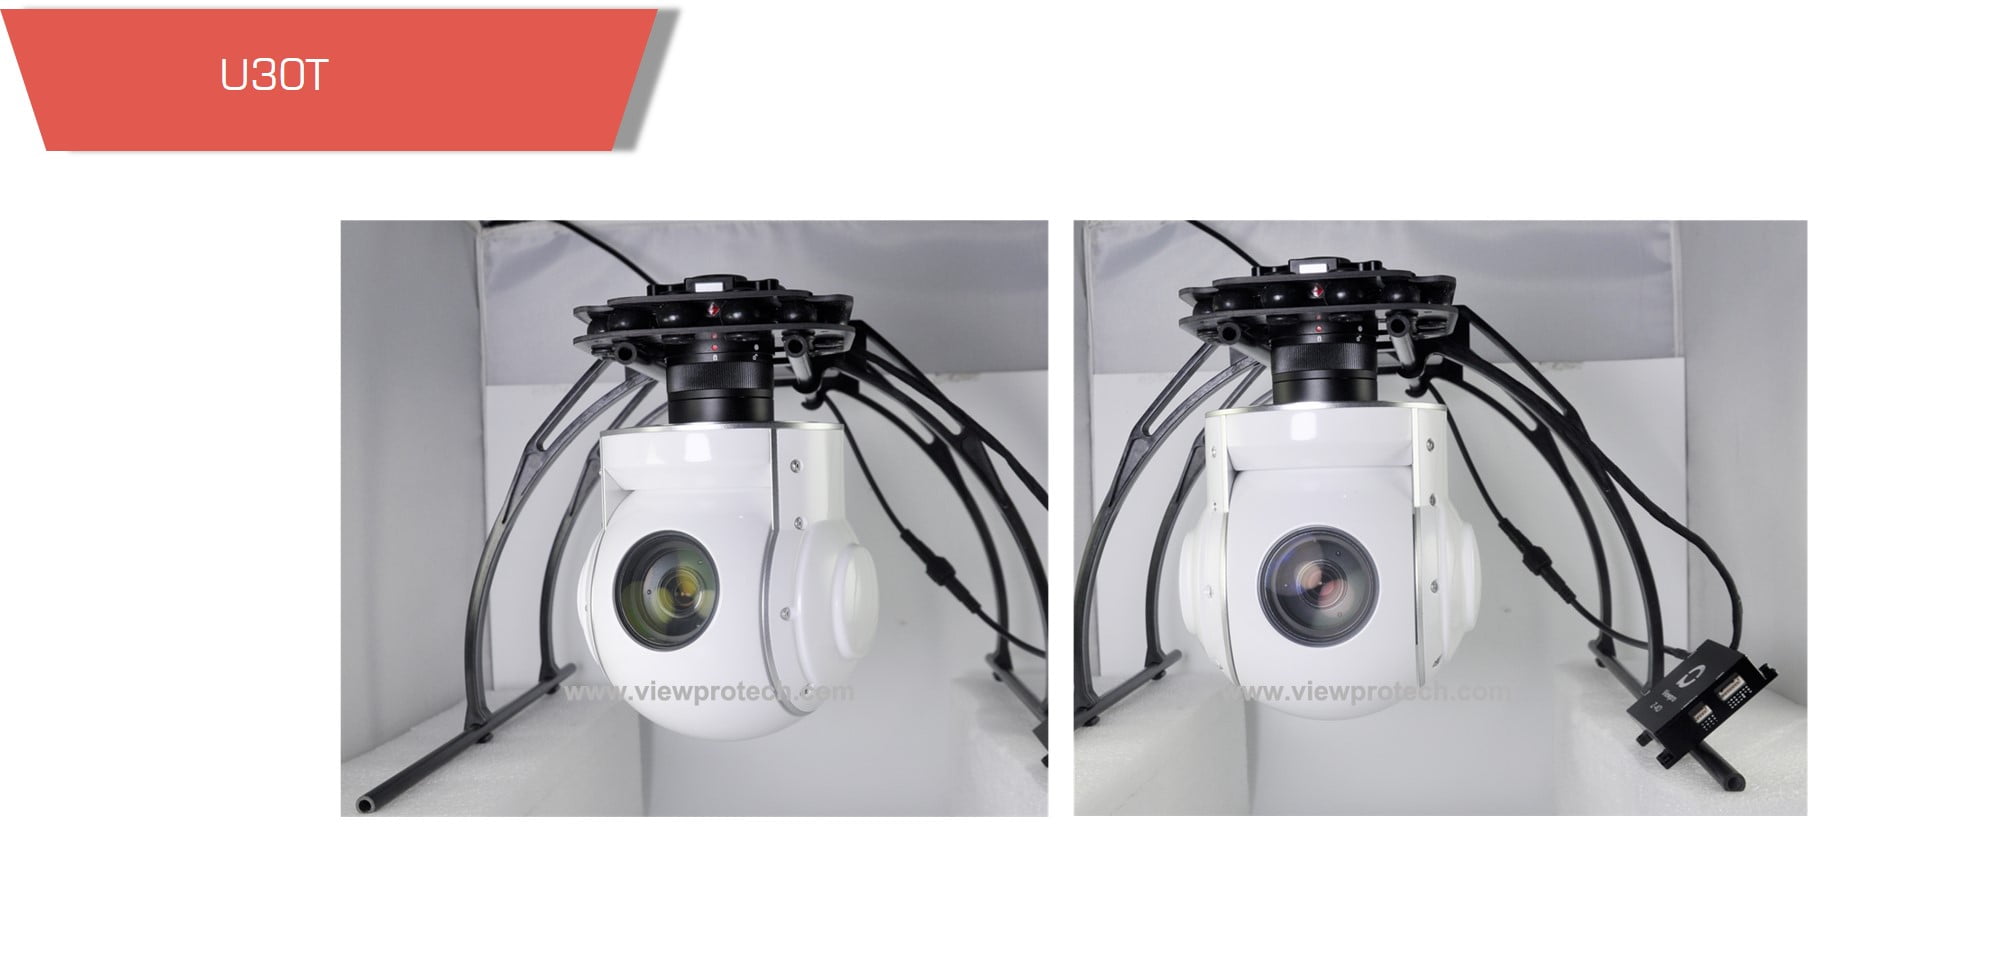 U30t11 - gimbal camera u30t,u30t,30x zoom,30x zoom gimbal,pan,pan tilt gimbal,gimbal camera drones,ptz camera drone - motionew - 10